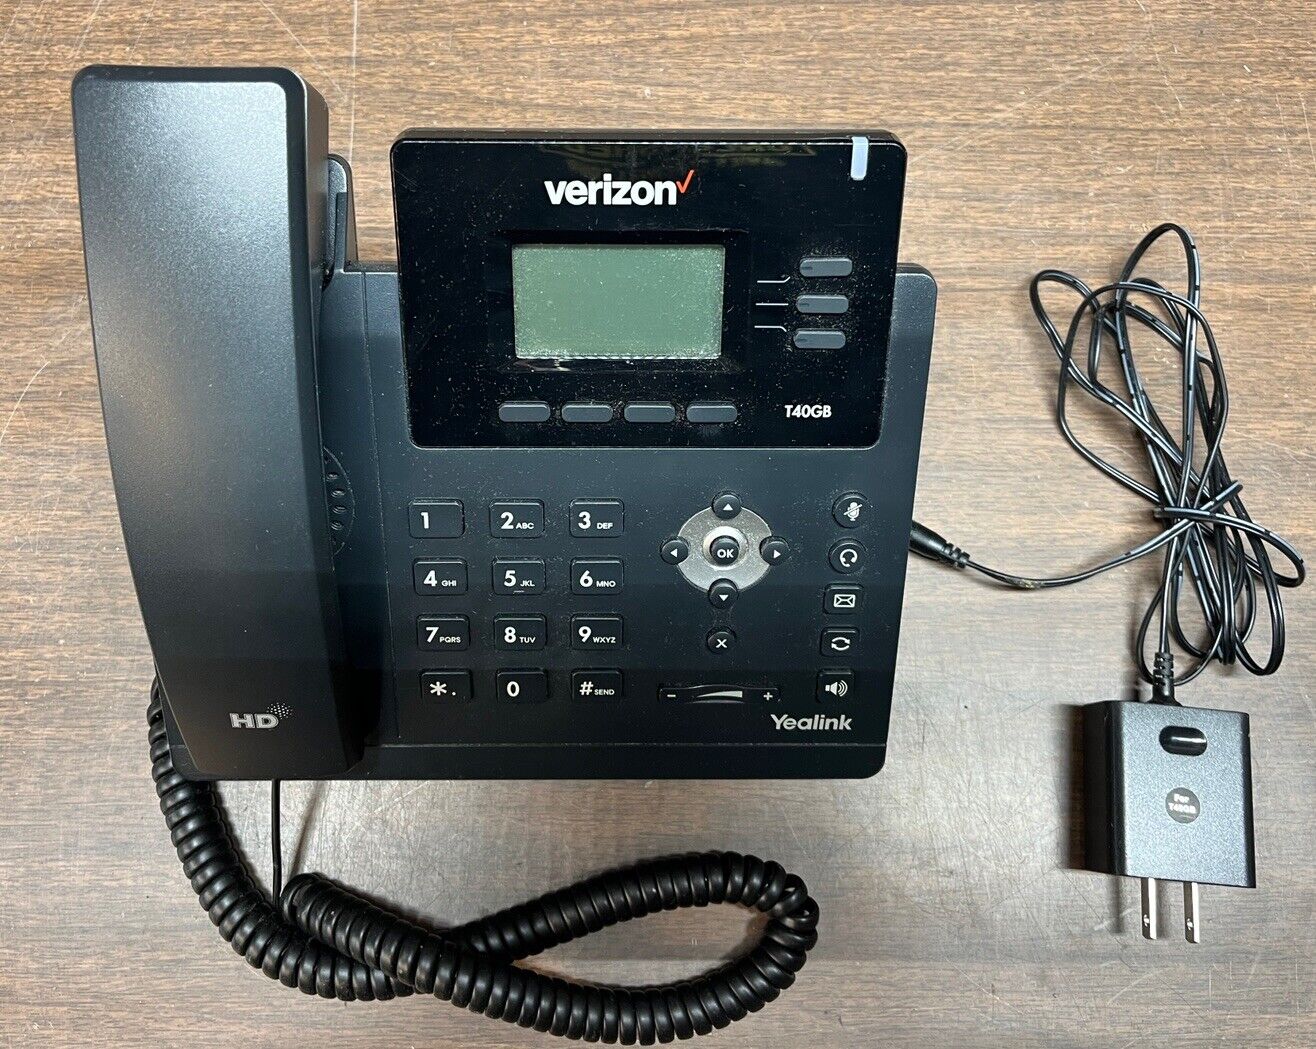 Yealink T40GB 3 Line IP Phone,  2.3-Inch LCD, Verizon Edition, w/Power Adapter